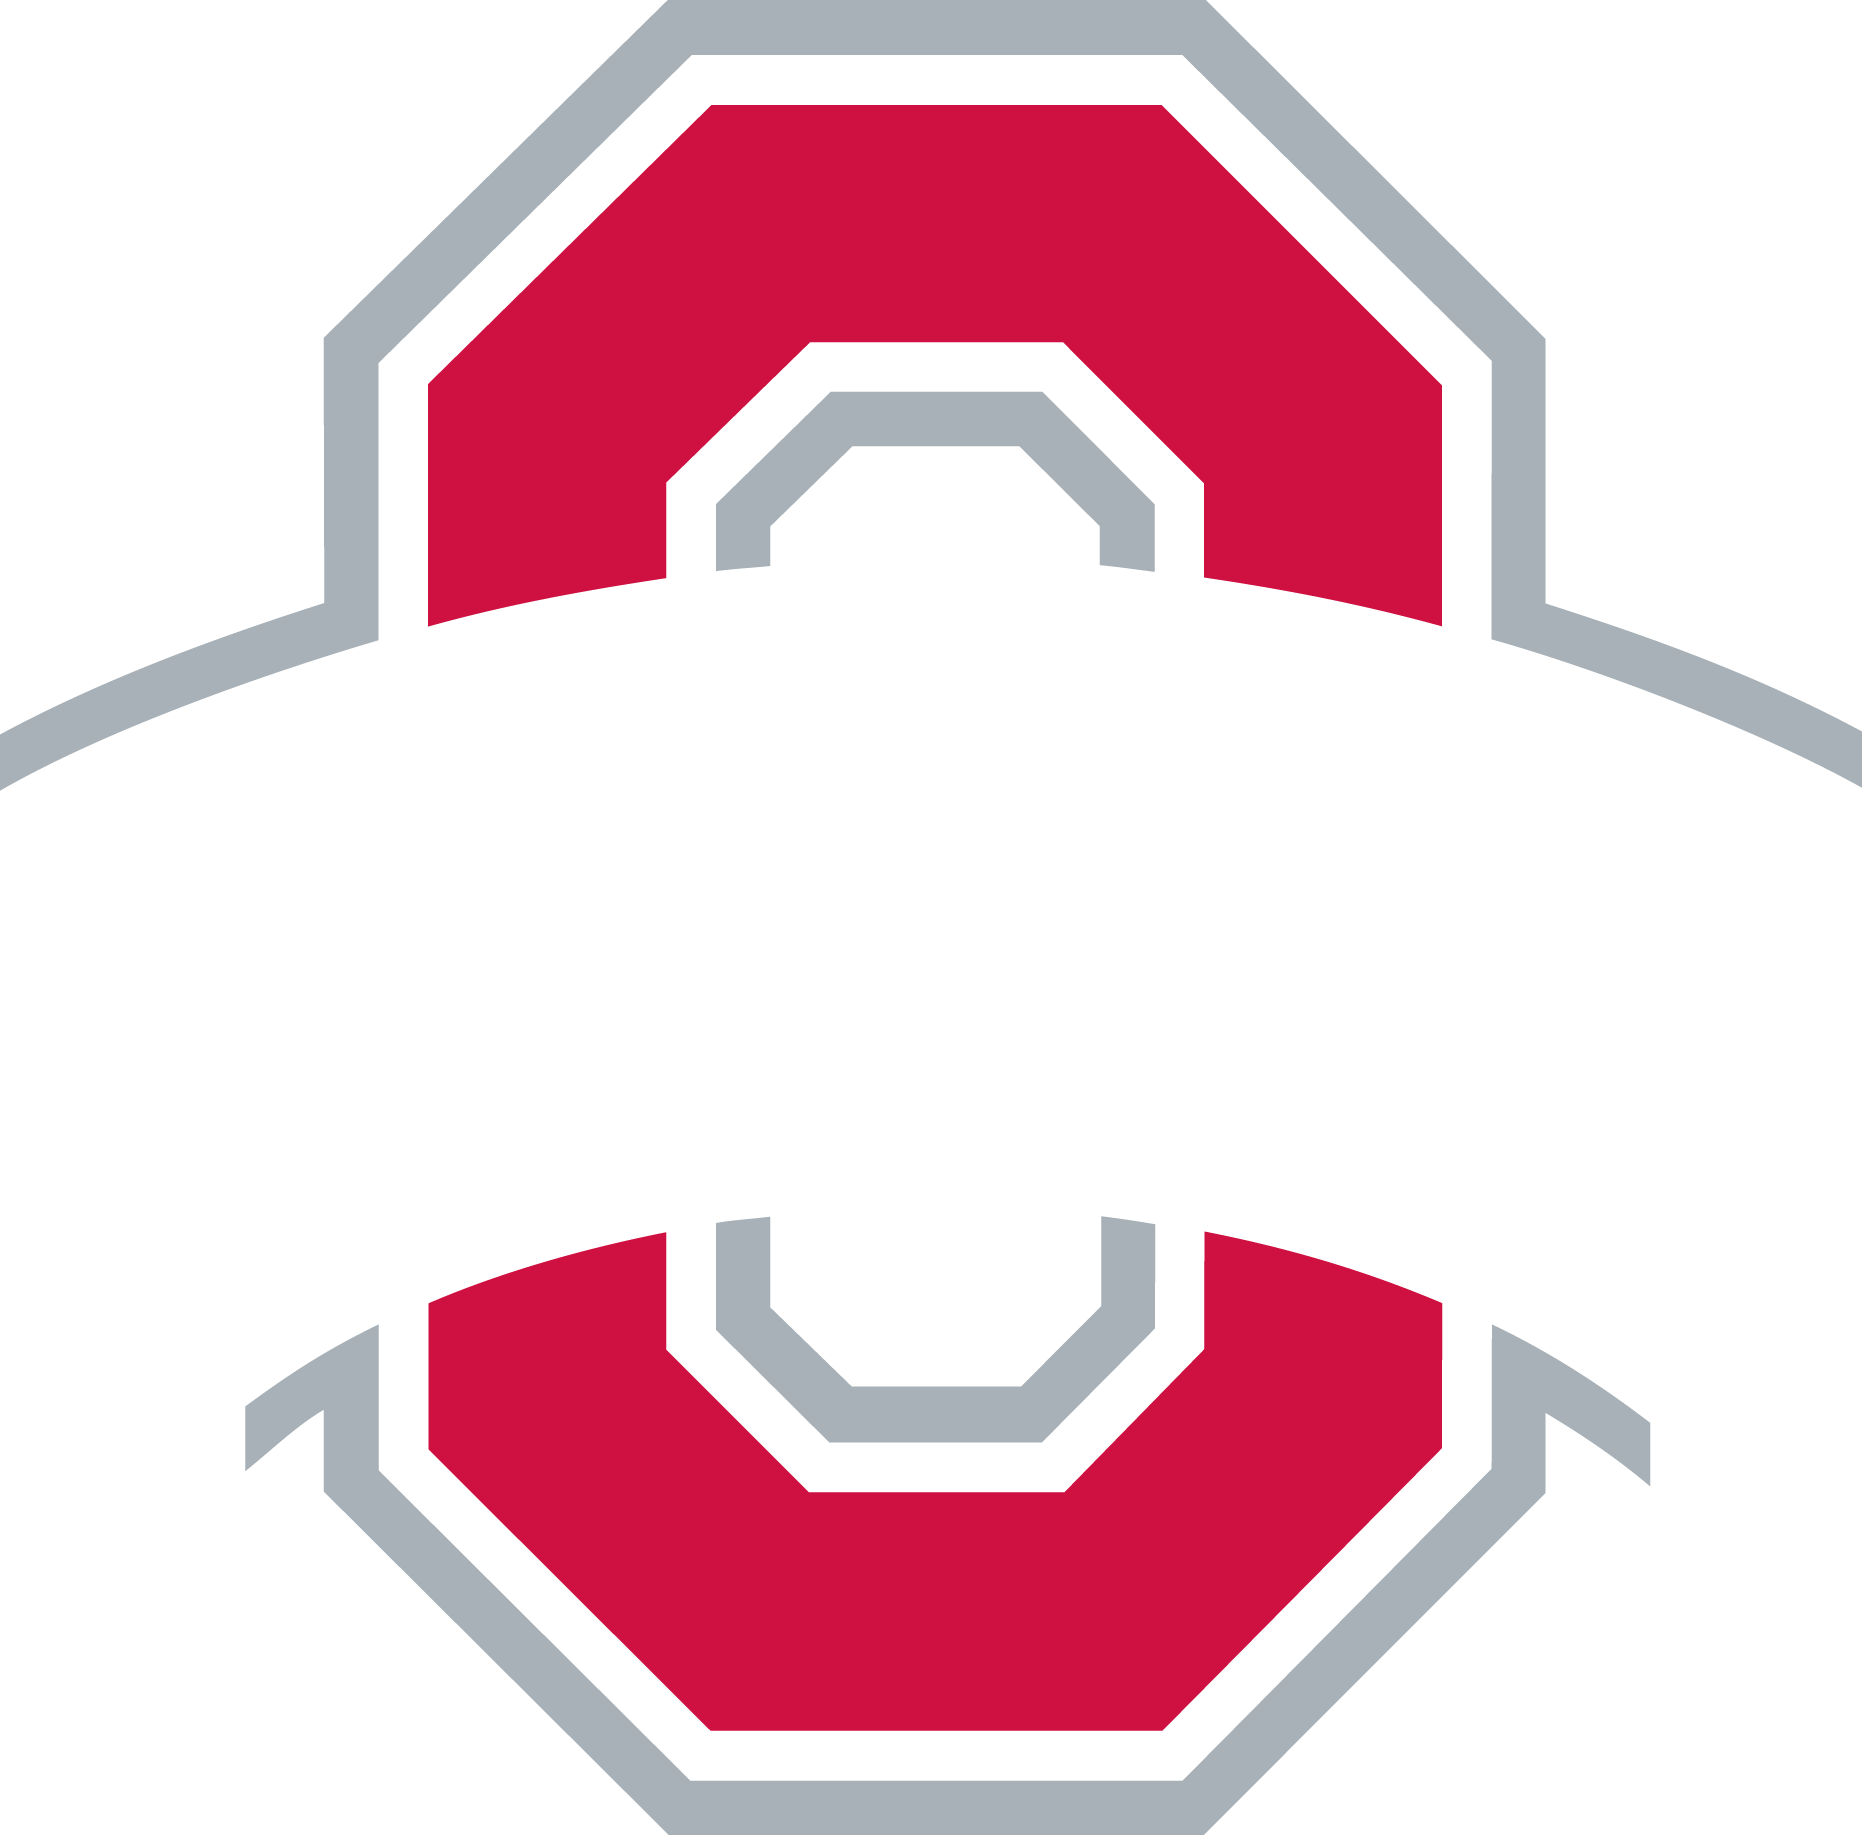 6 Ohio State - Ohio State Football (1862x1835)